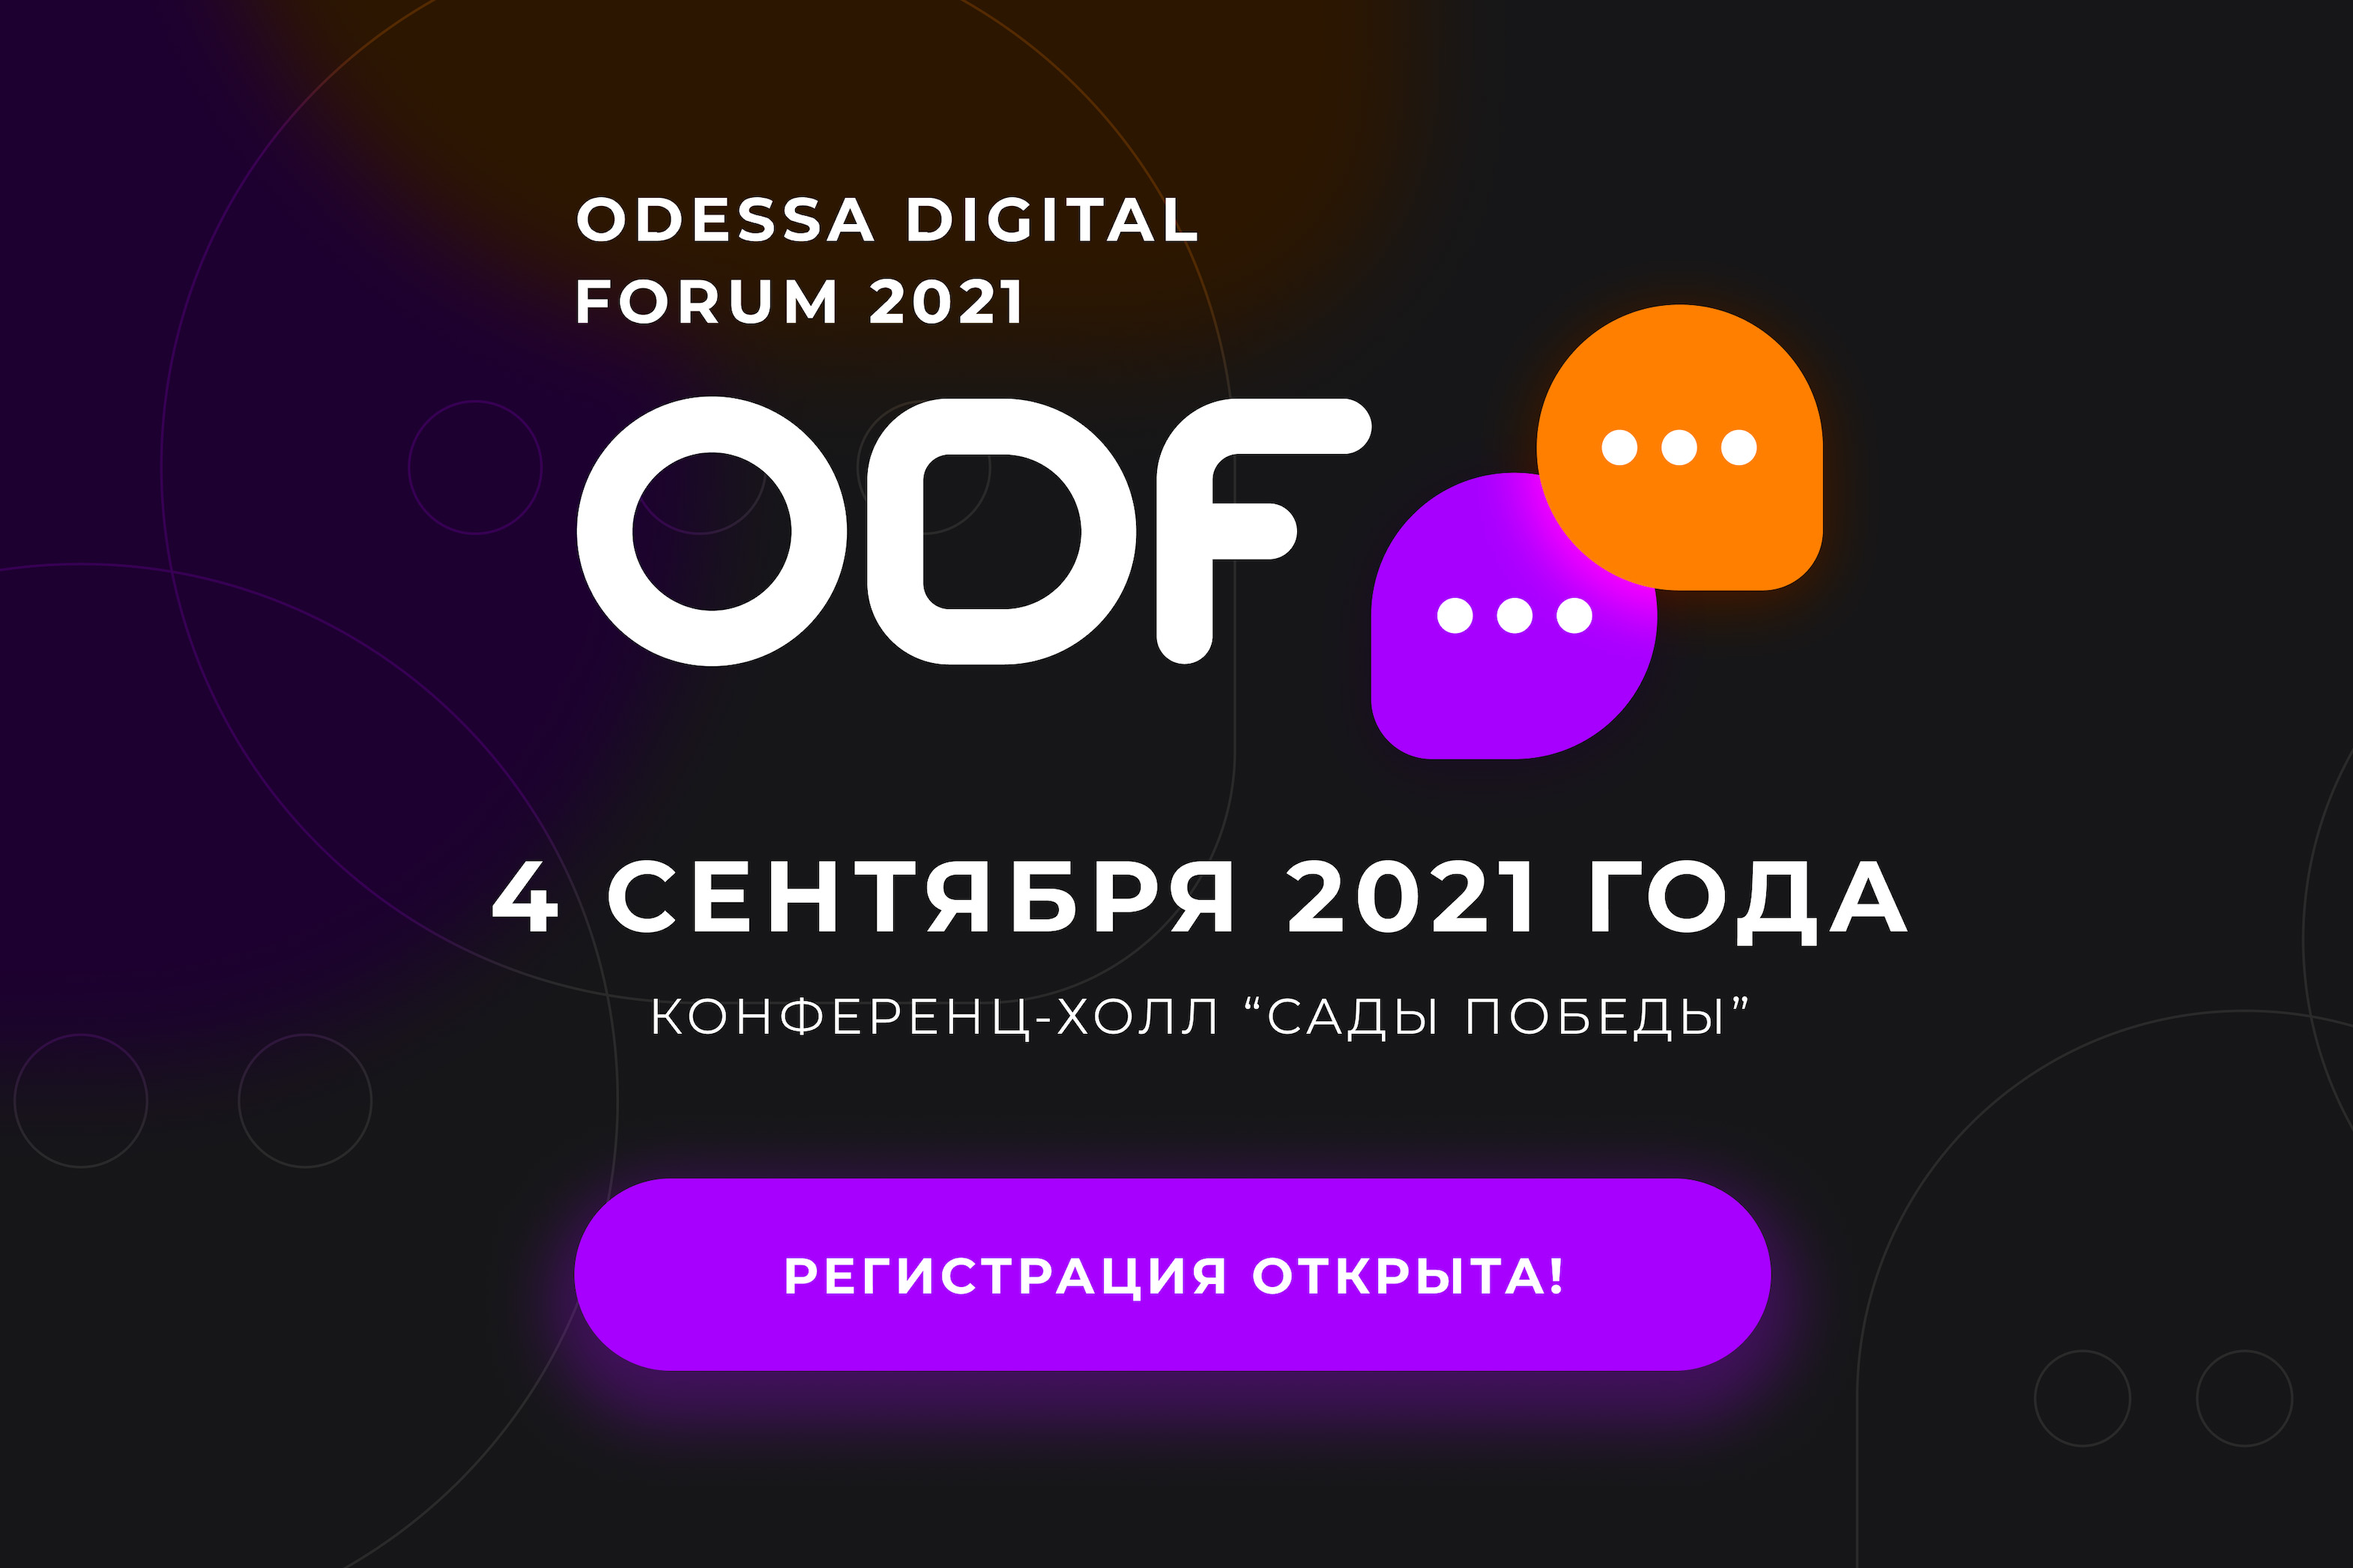 Odessa Digital Forum 2021